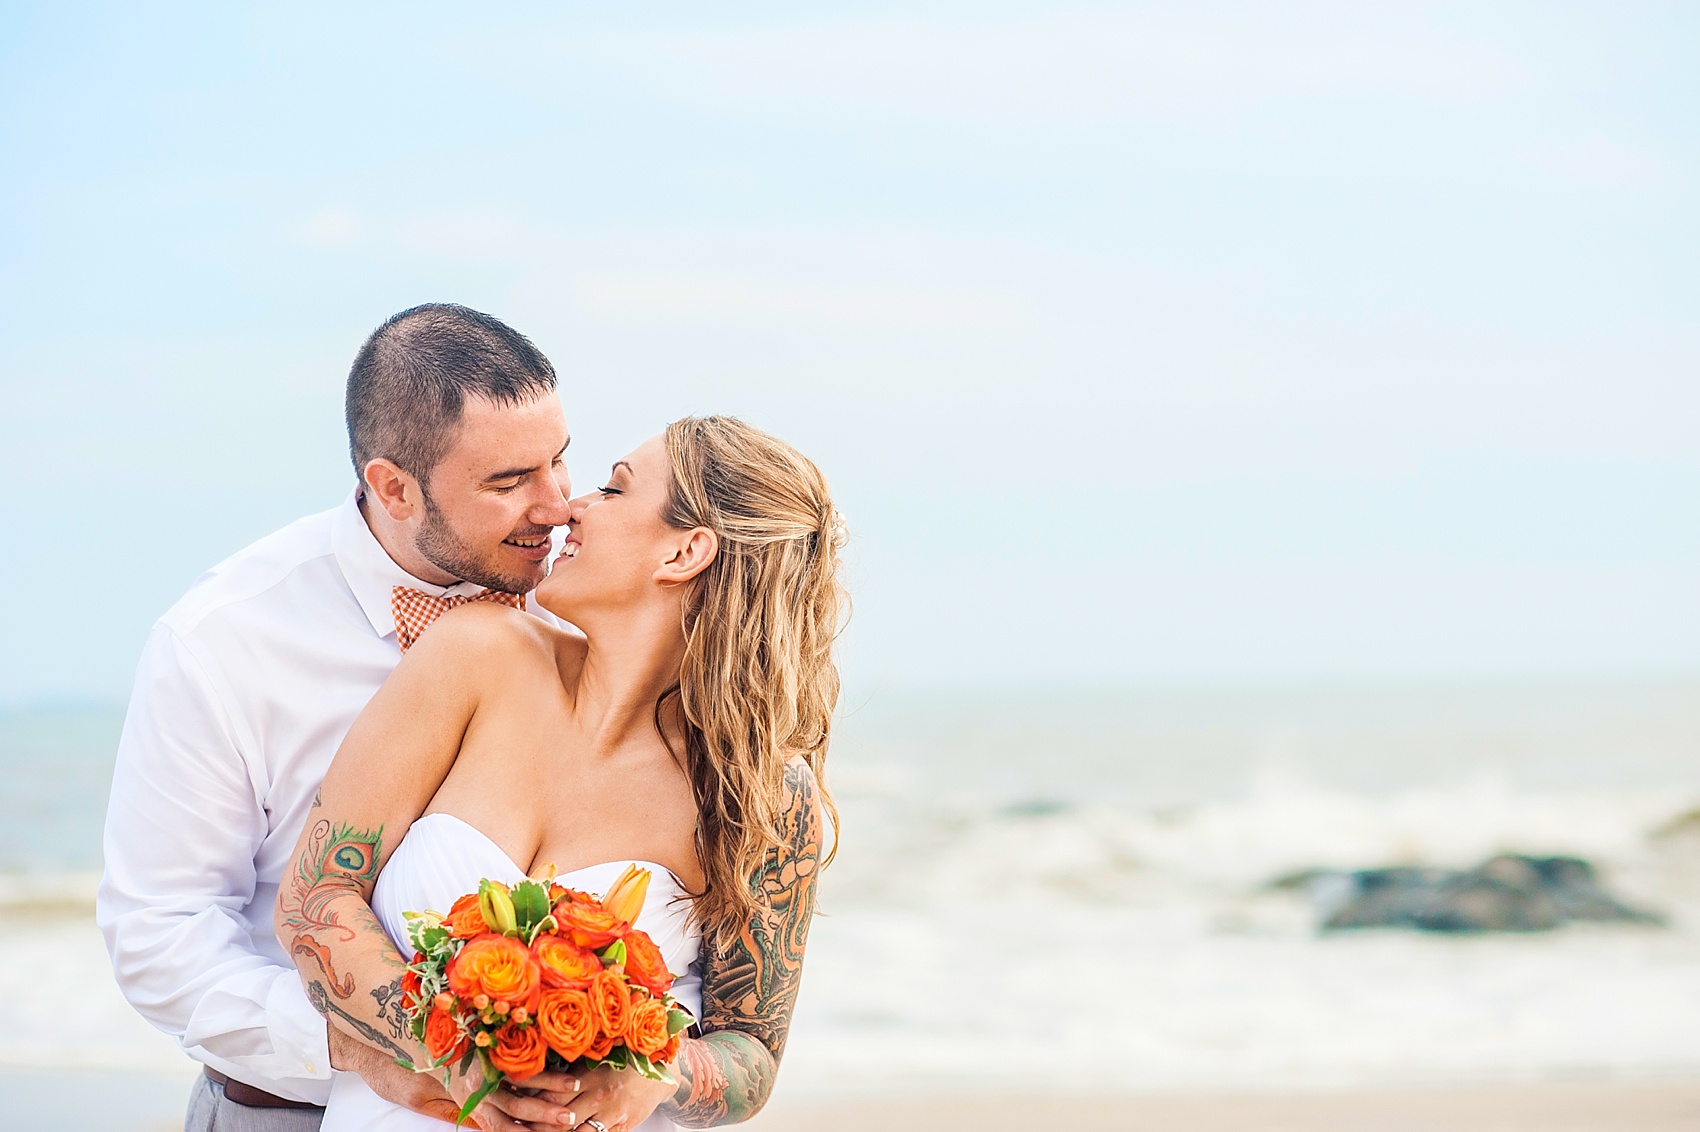 Beach wedding on Long Island shore, New York. Photos by Mikkel Paige Photography.